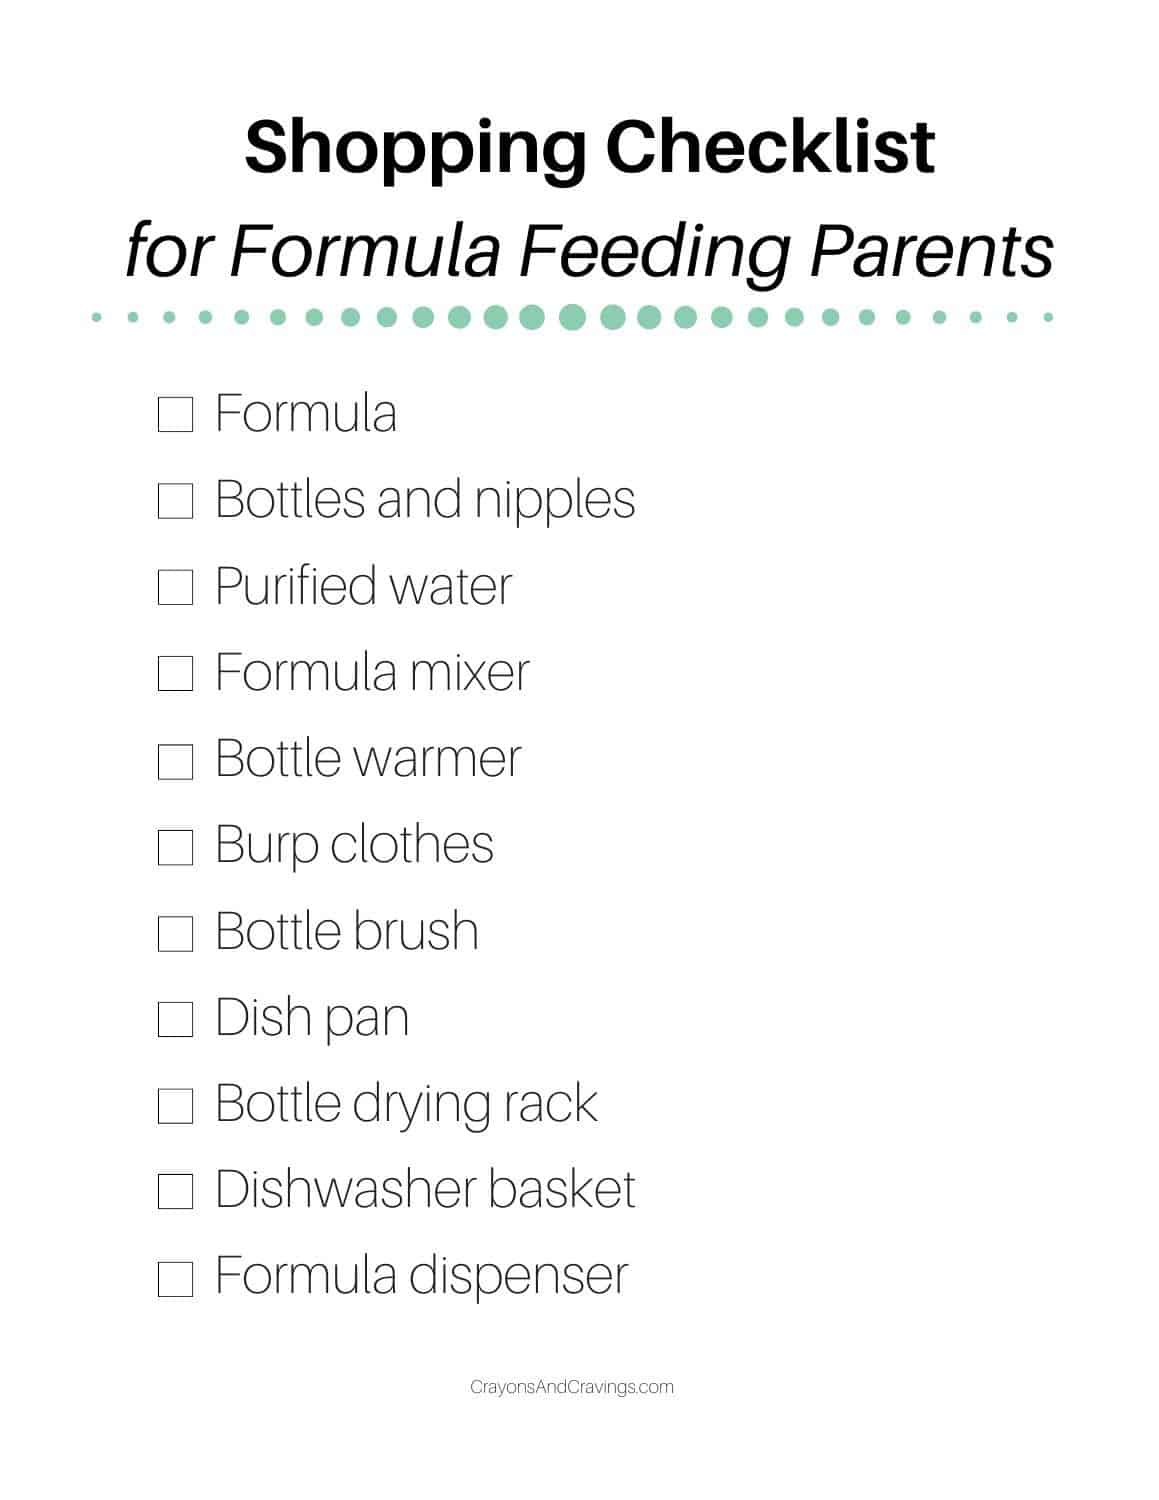 Shopping list for formula feeding parents printable.